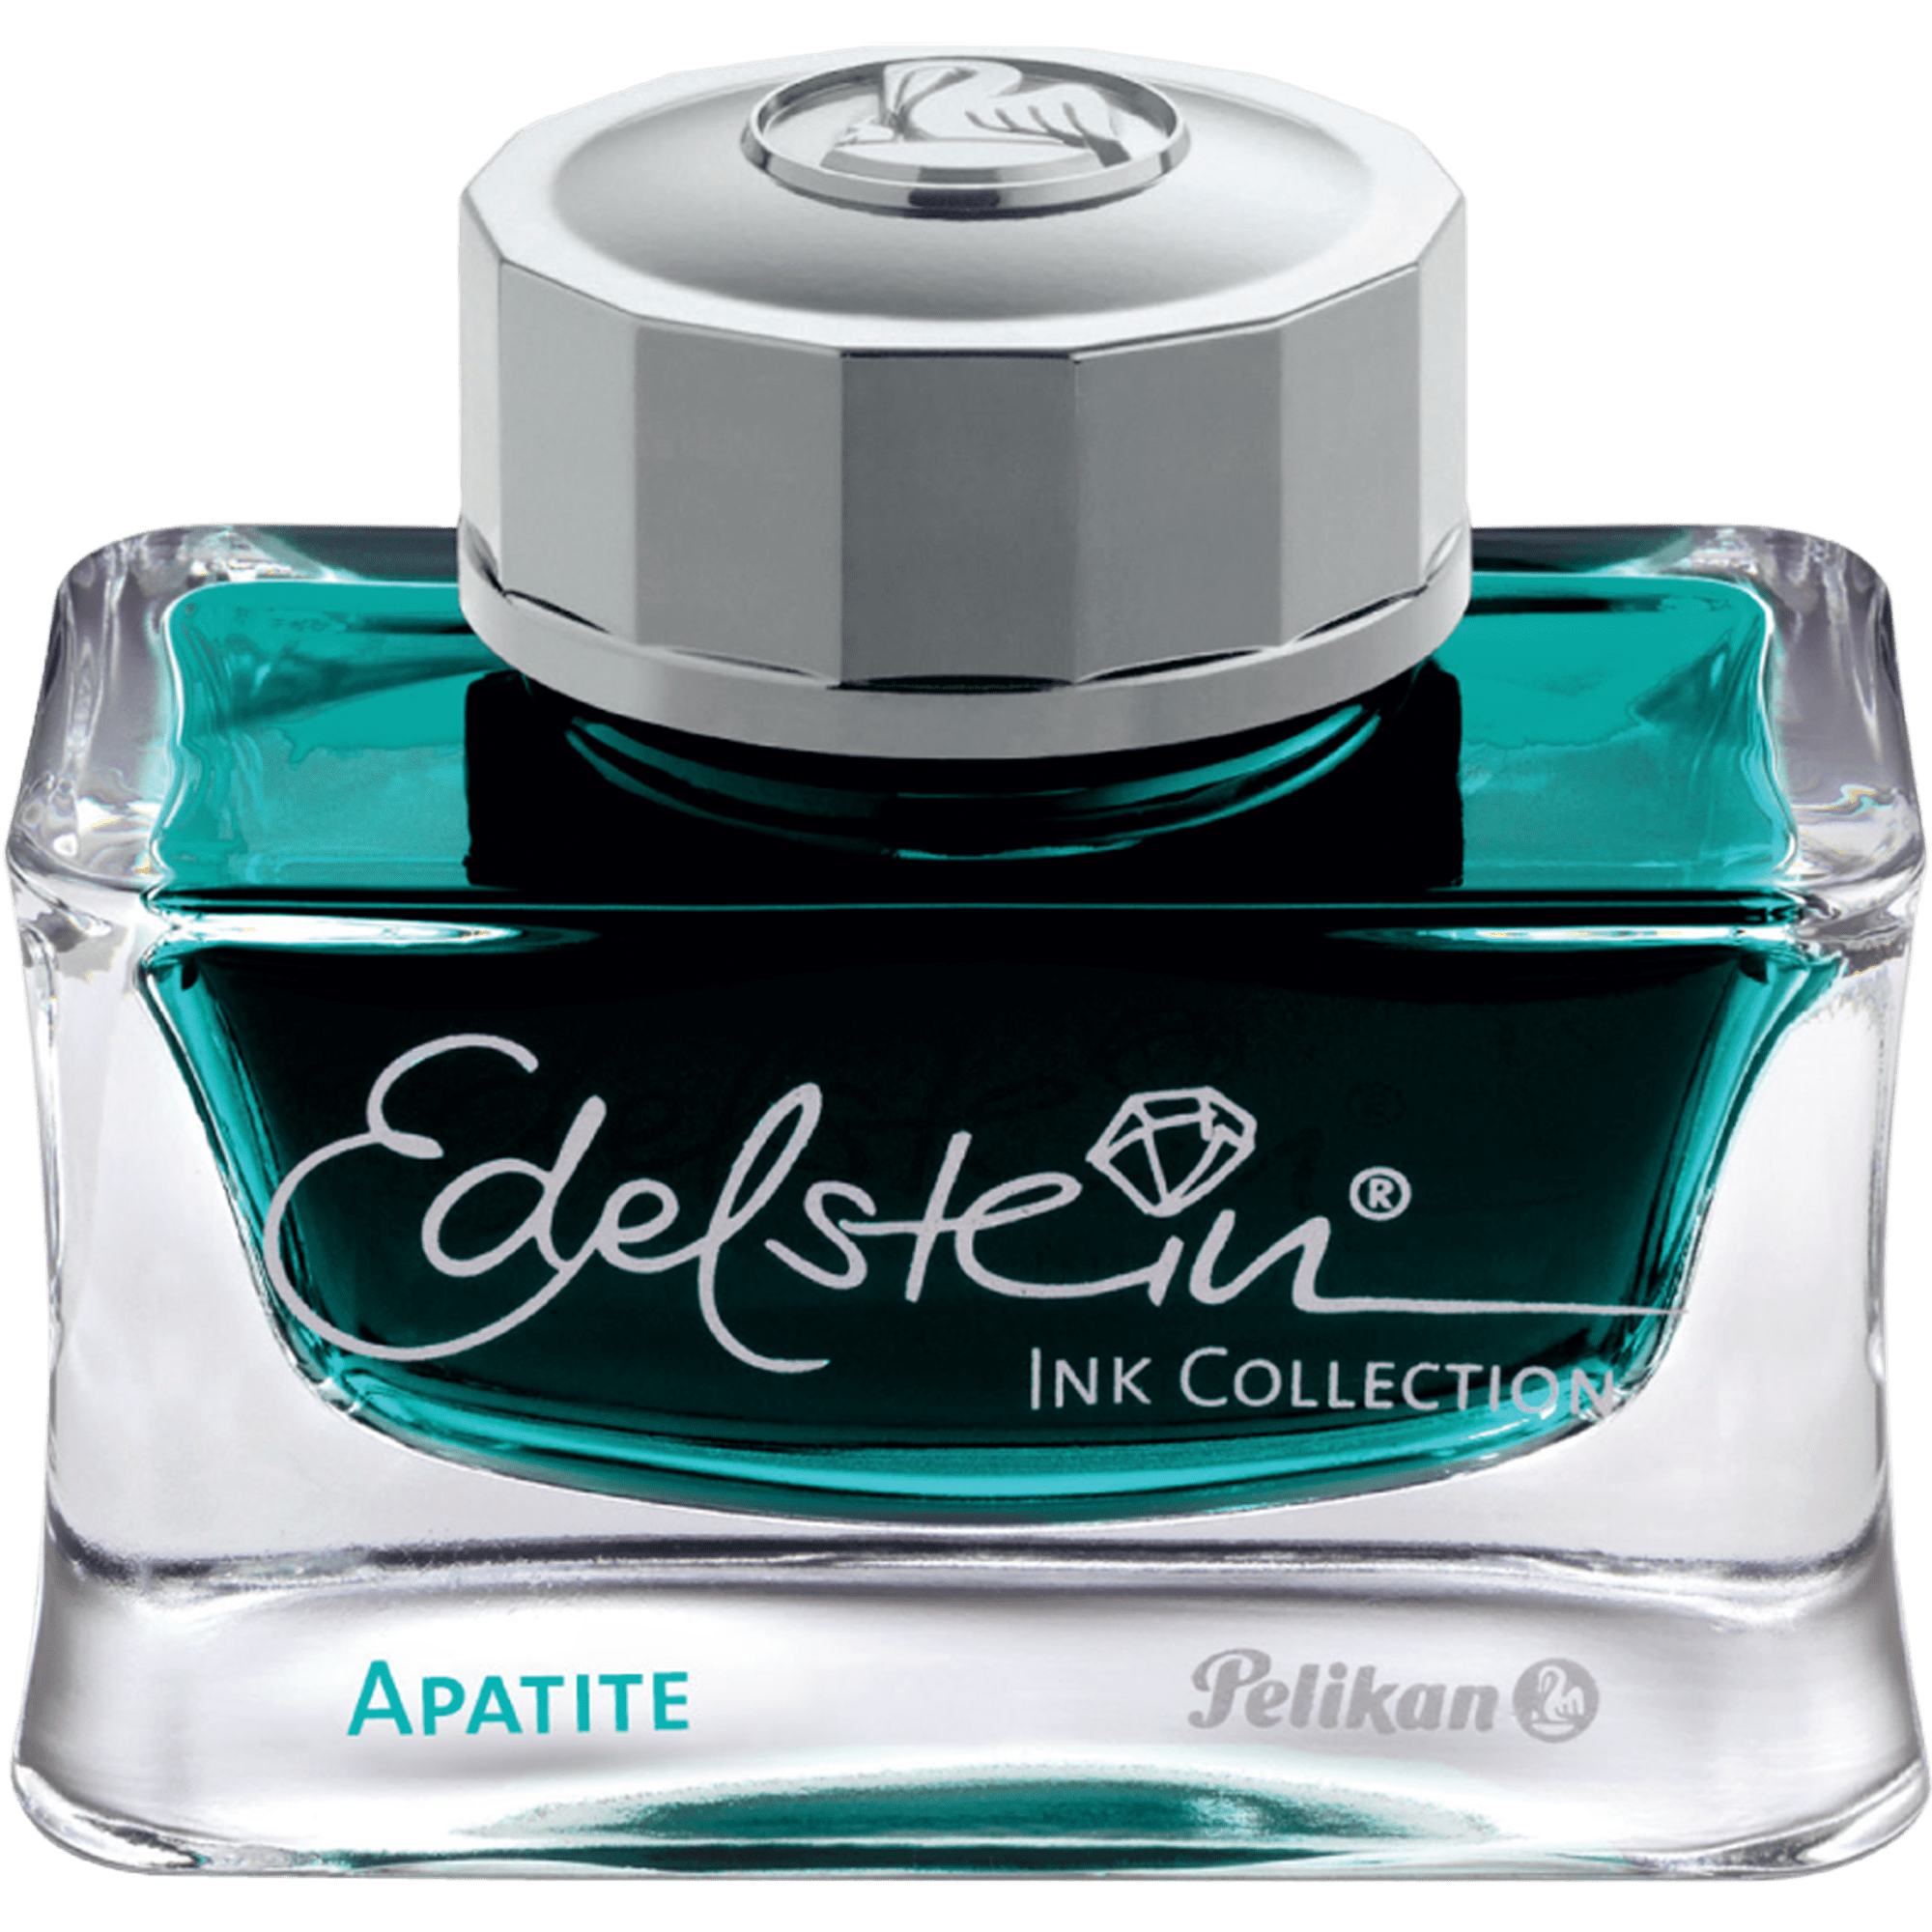 Pelikan Edelstein Ink Bottle - Apatite (Ink of the Year 2022) - 50ml-Pen Boutique Ltd